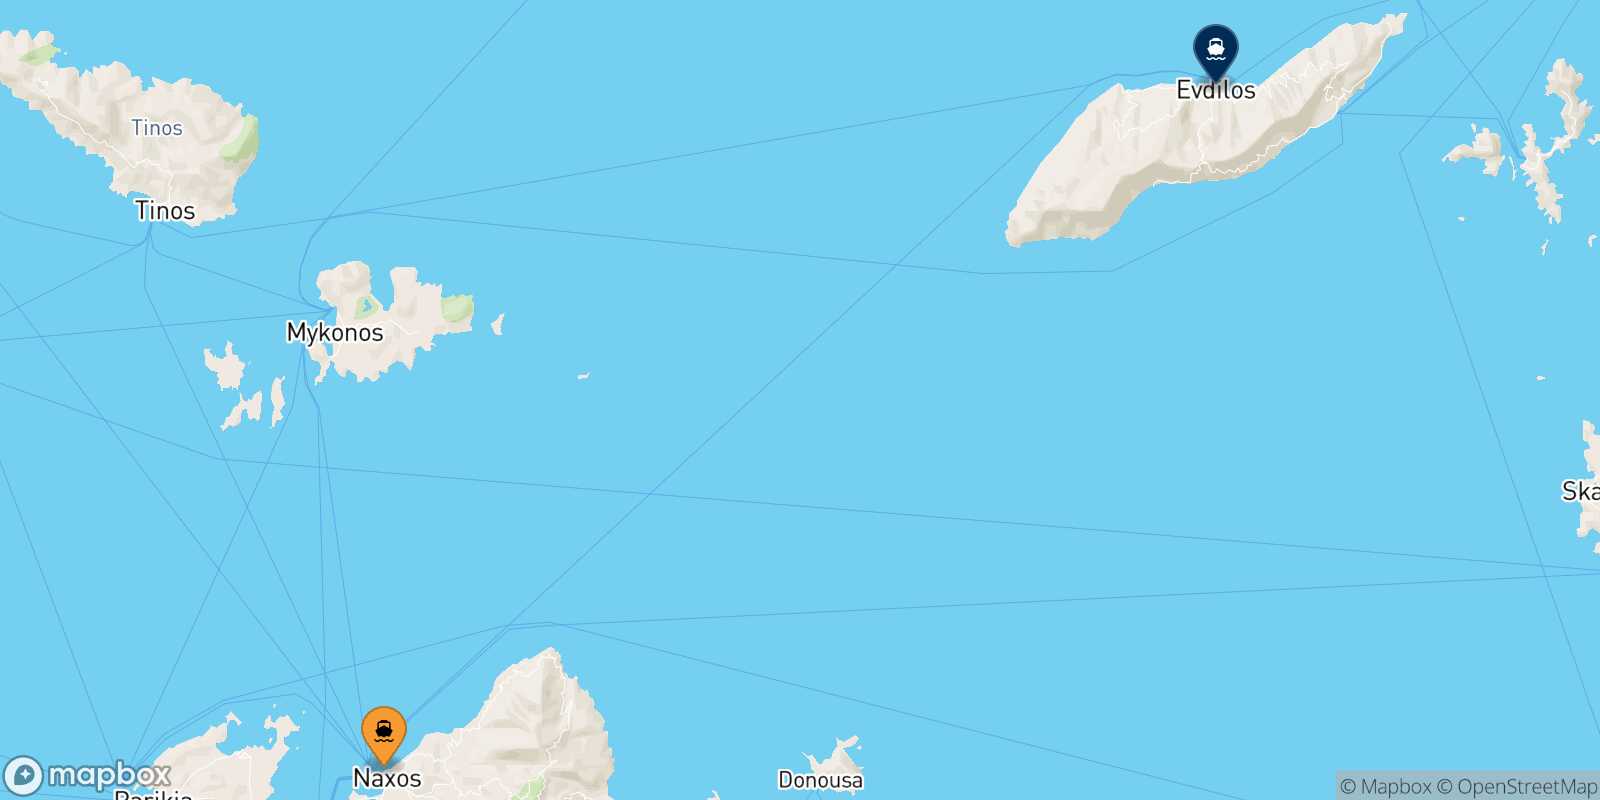 Naxos Evdilos (Ikaria) route map